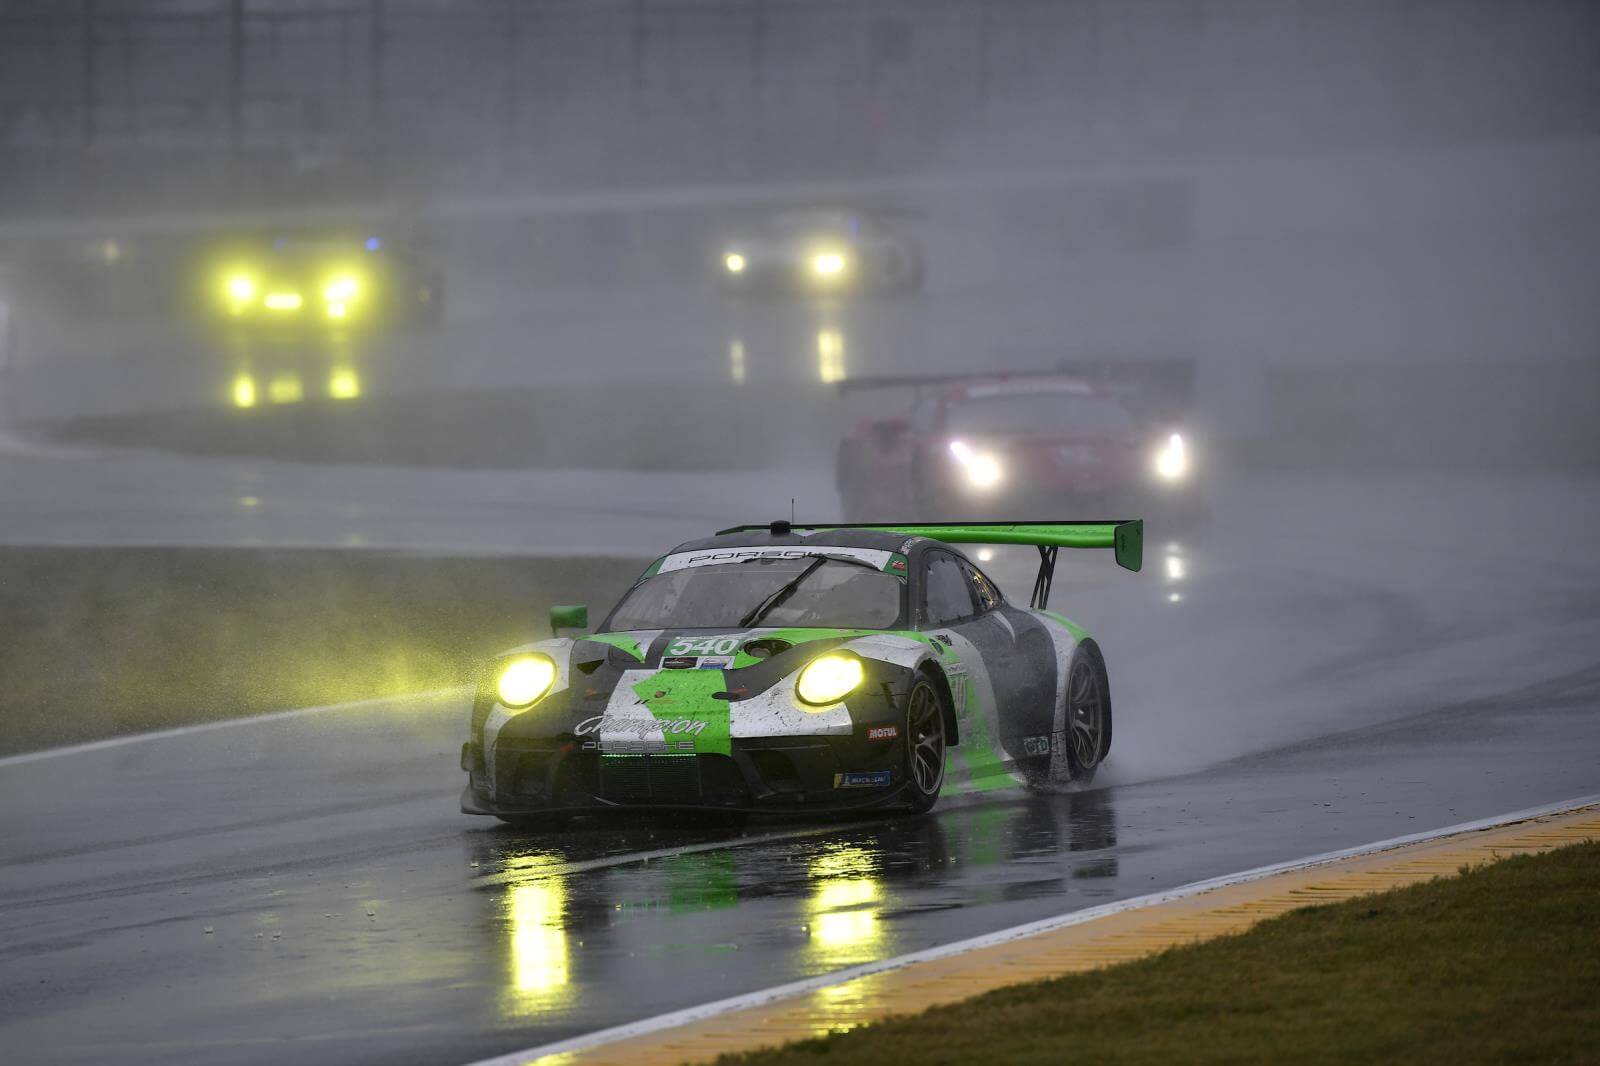 Porsche GT Cup car racing in the rain at IMSA 24hrs of Daytona